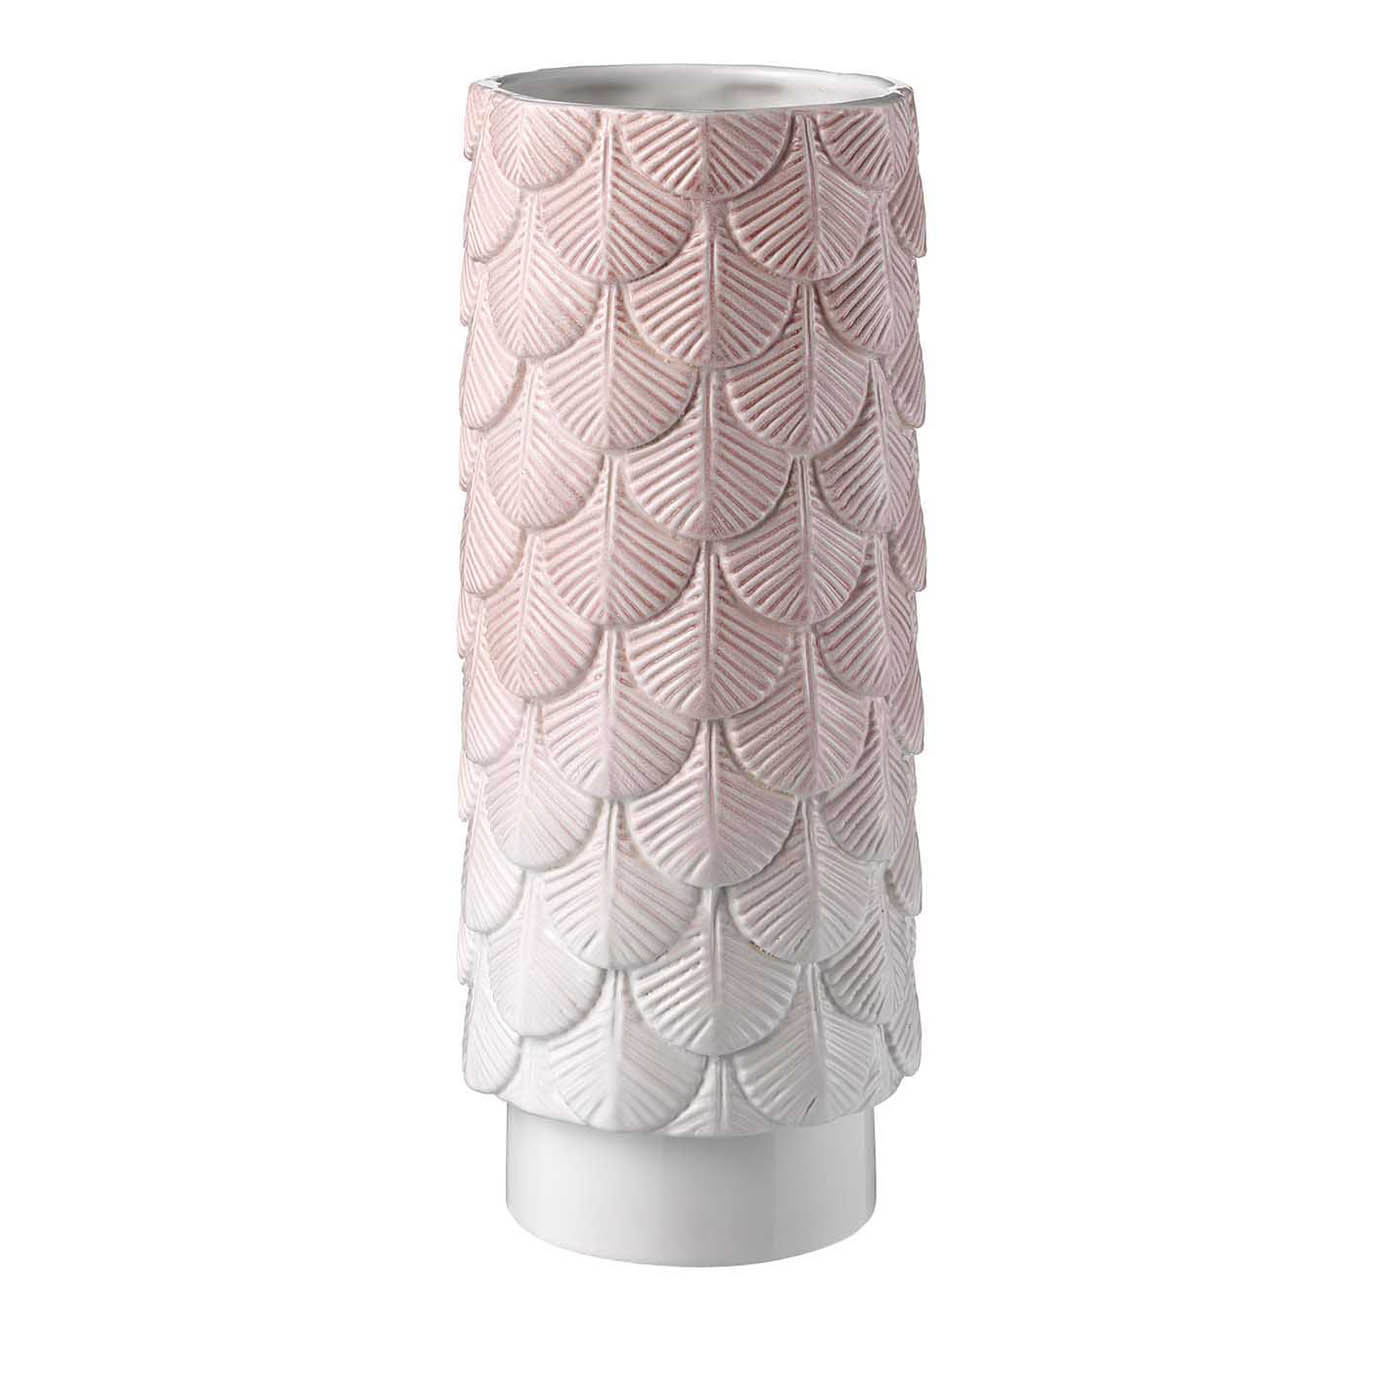 White and Pink Plumage Vase - Botteganove